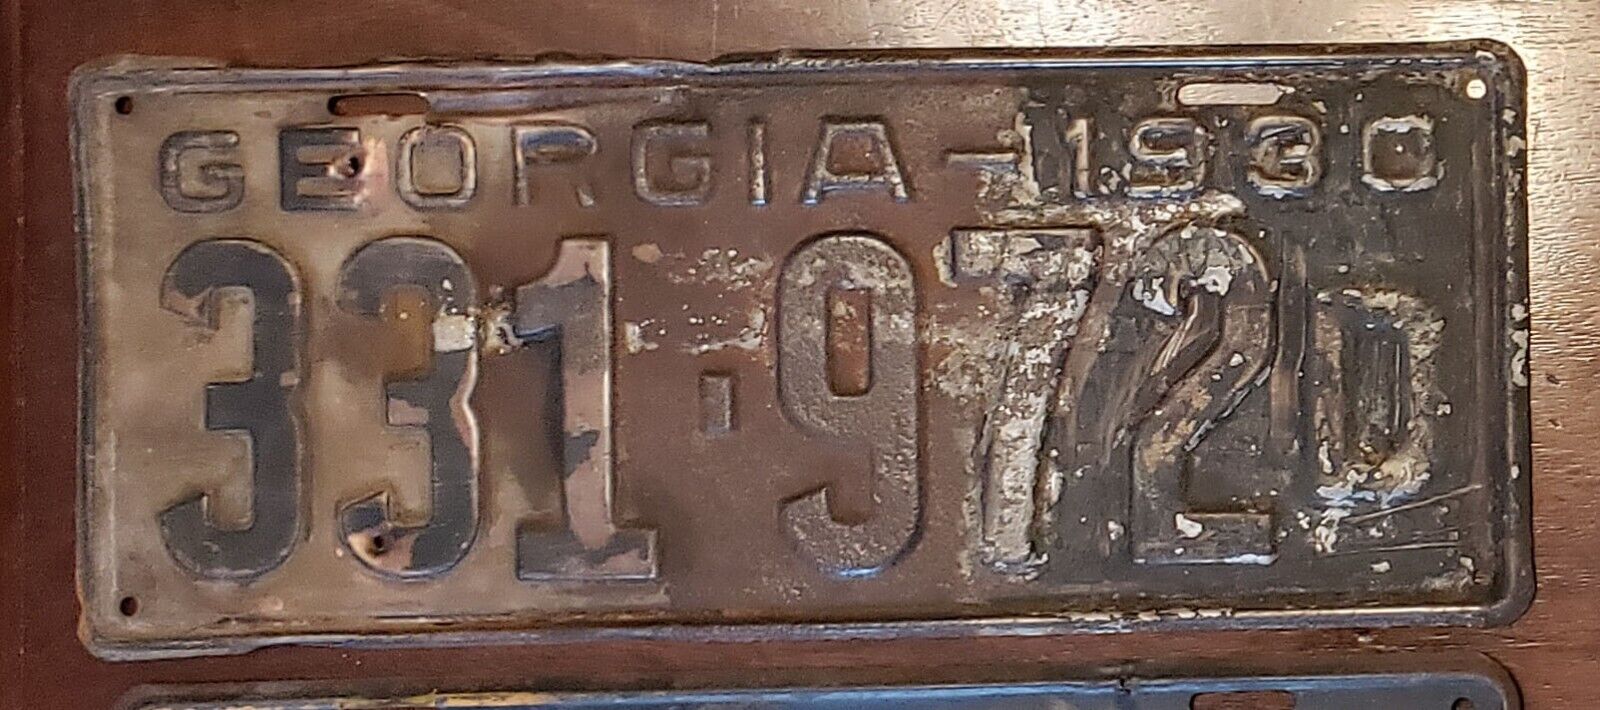 1930 Georgia  License Plate Tag  # 331-972       Model A Ford Year